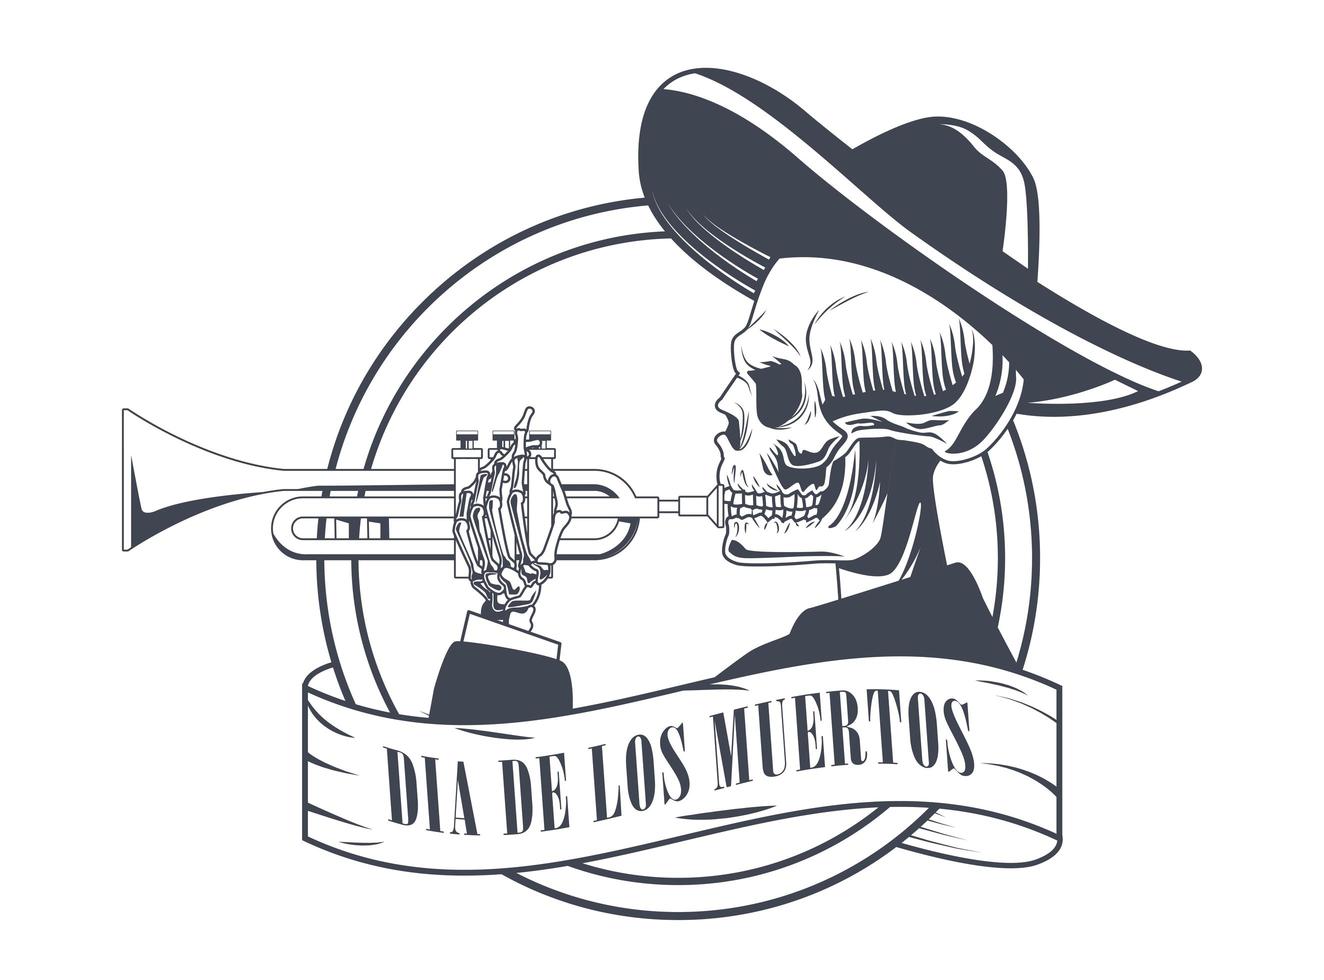 dia de los muertos poster with mariachi skull playing trumpet drawing vector